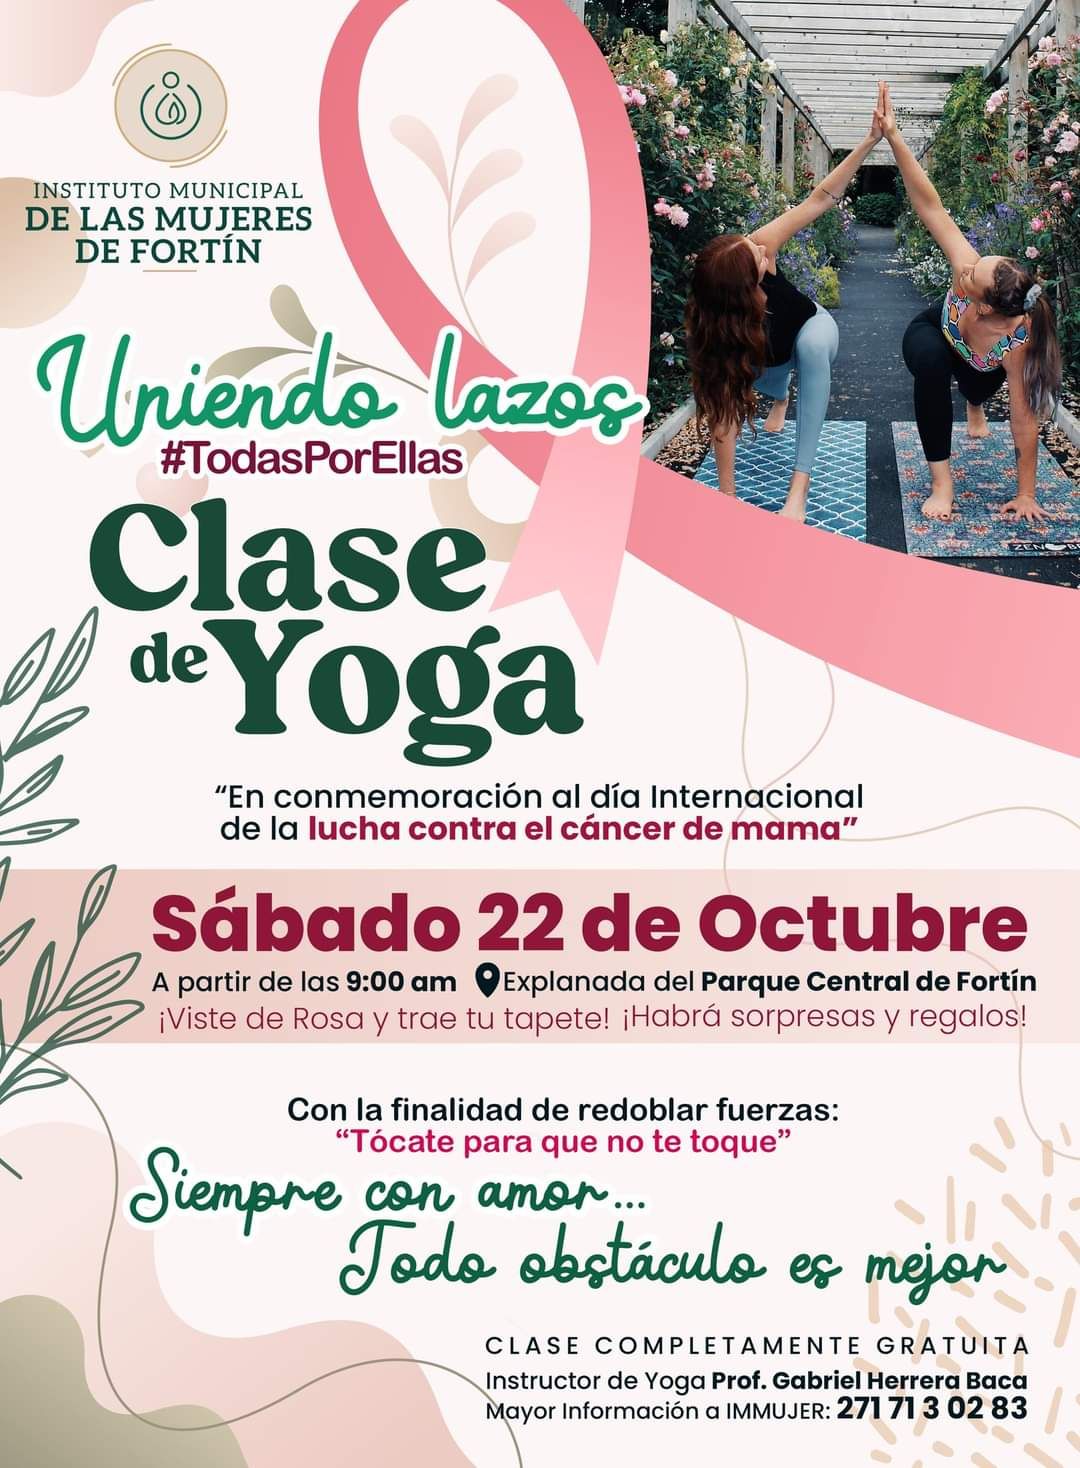 Invita Instituto de la Mujer a participar en clase masiva de Yoga 